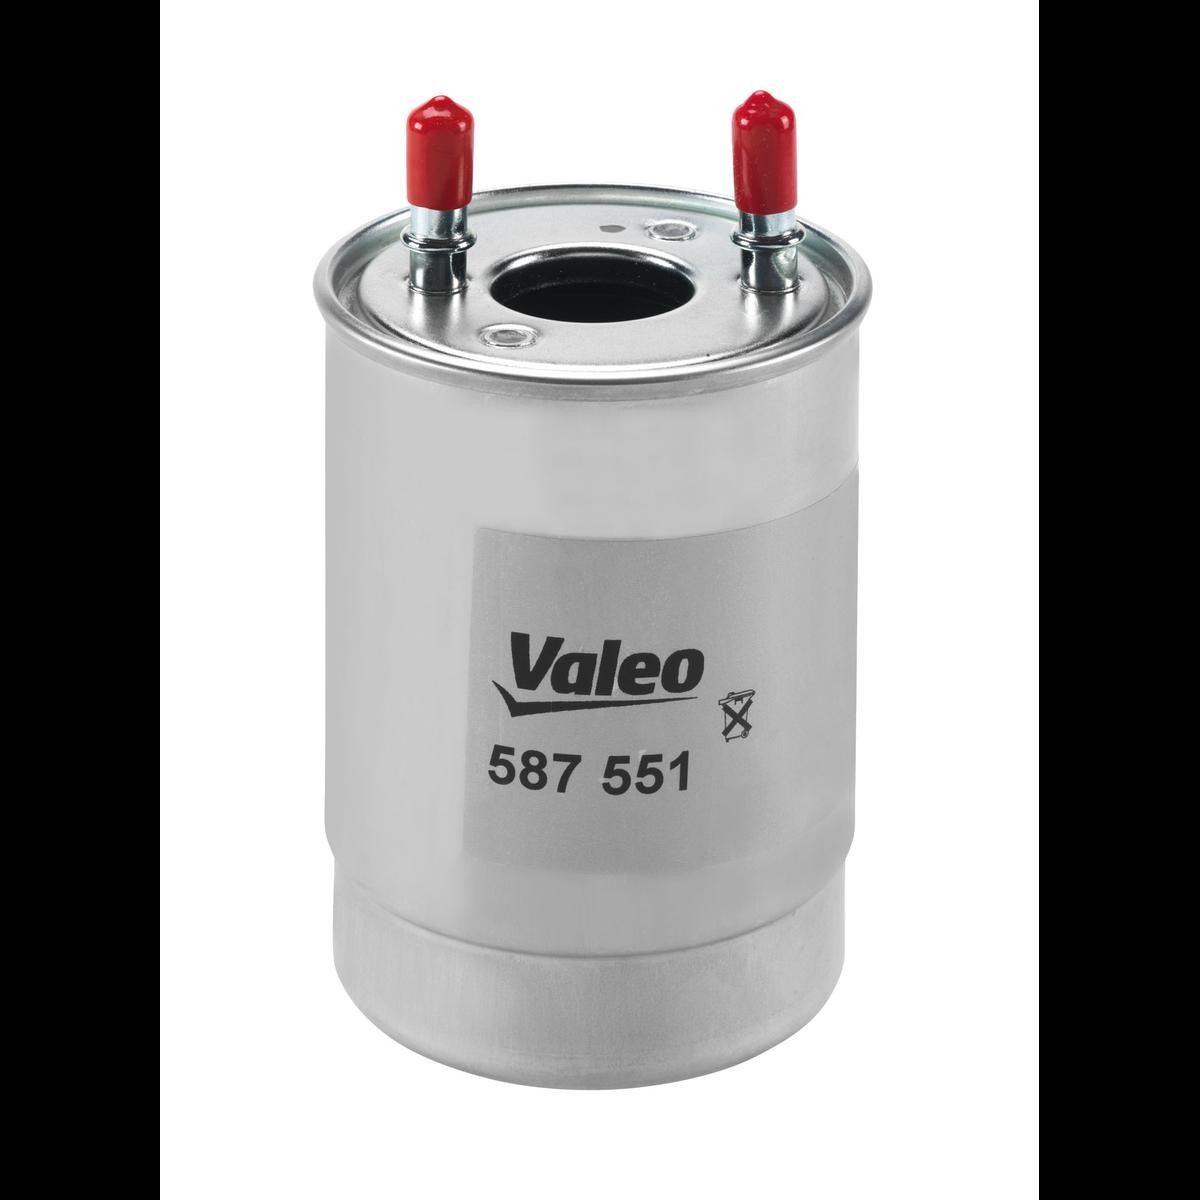 VALEO 587551 Fuel filter In-Line Filter, 10mm, 10mm